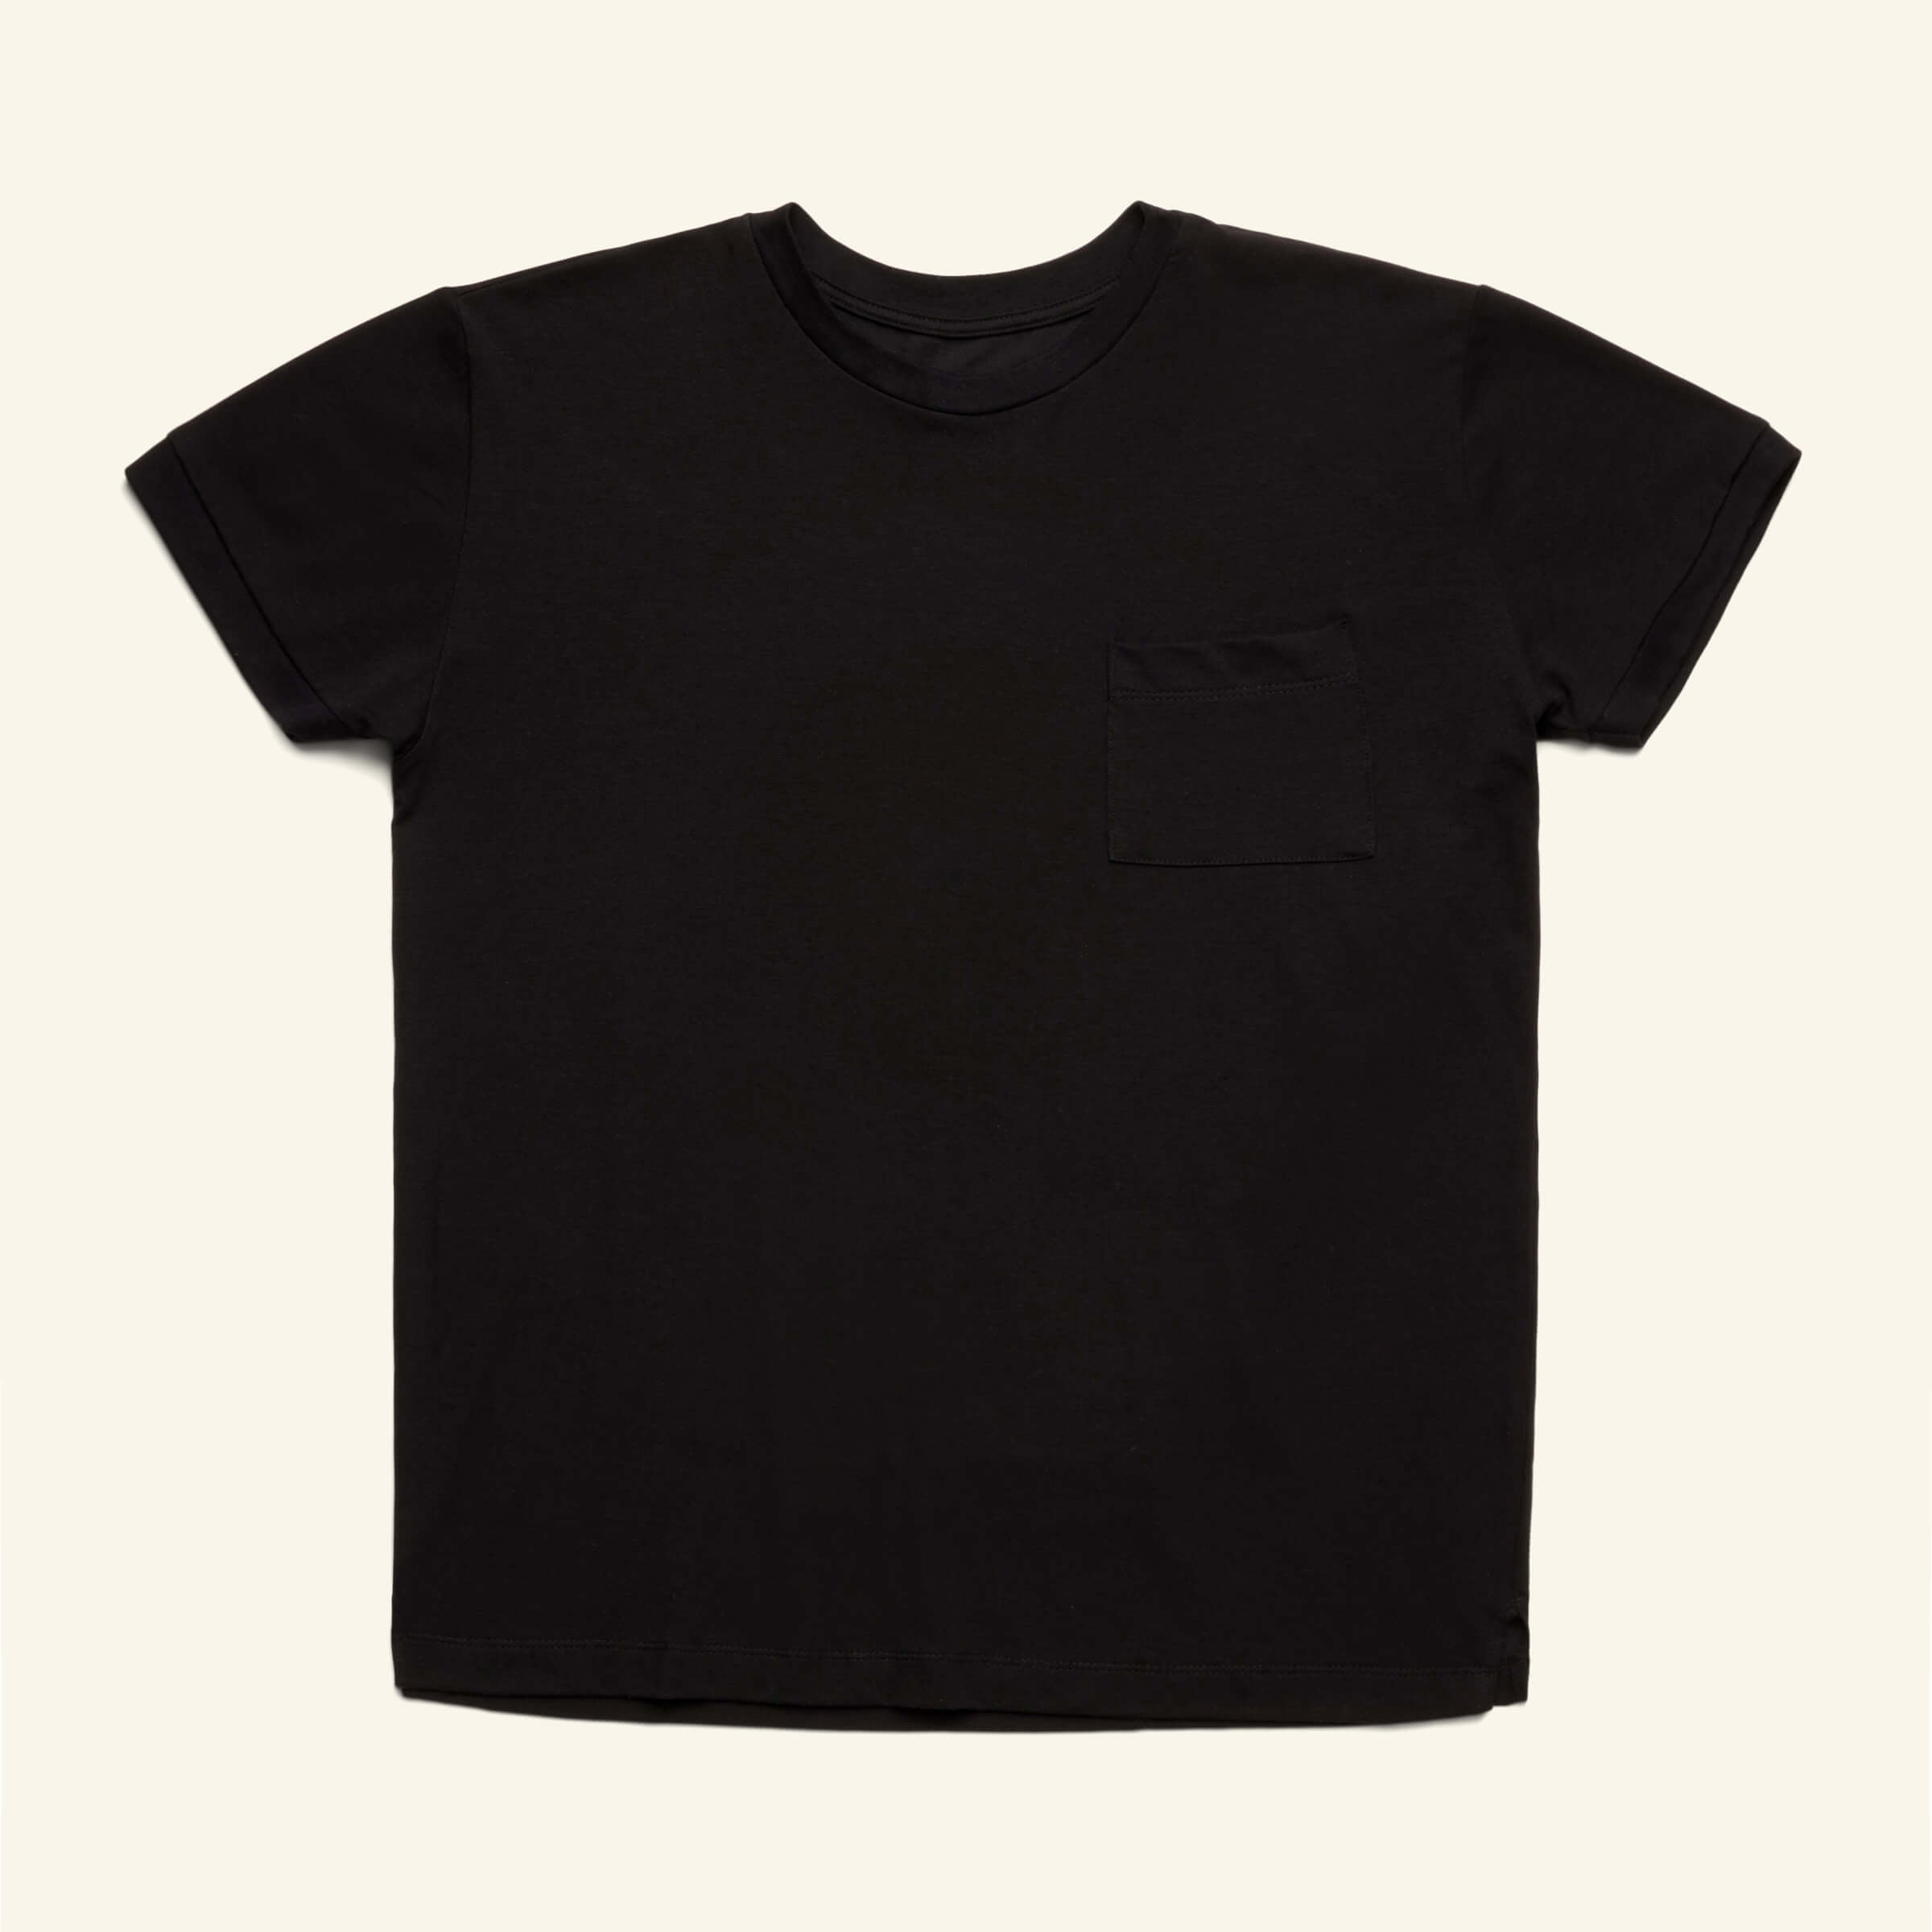 T-shirt SLIM PUSH UP K117 black MITARE